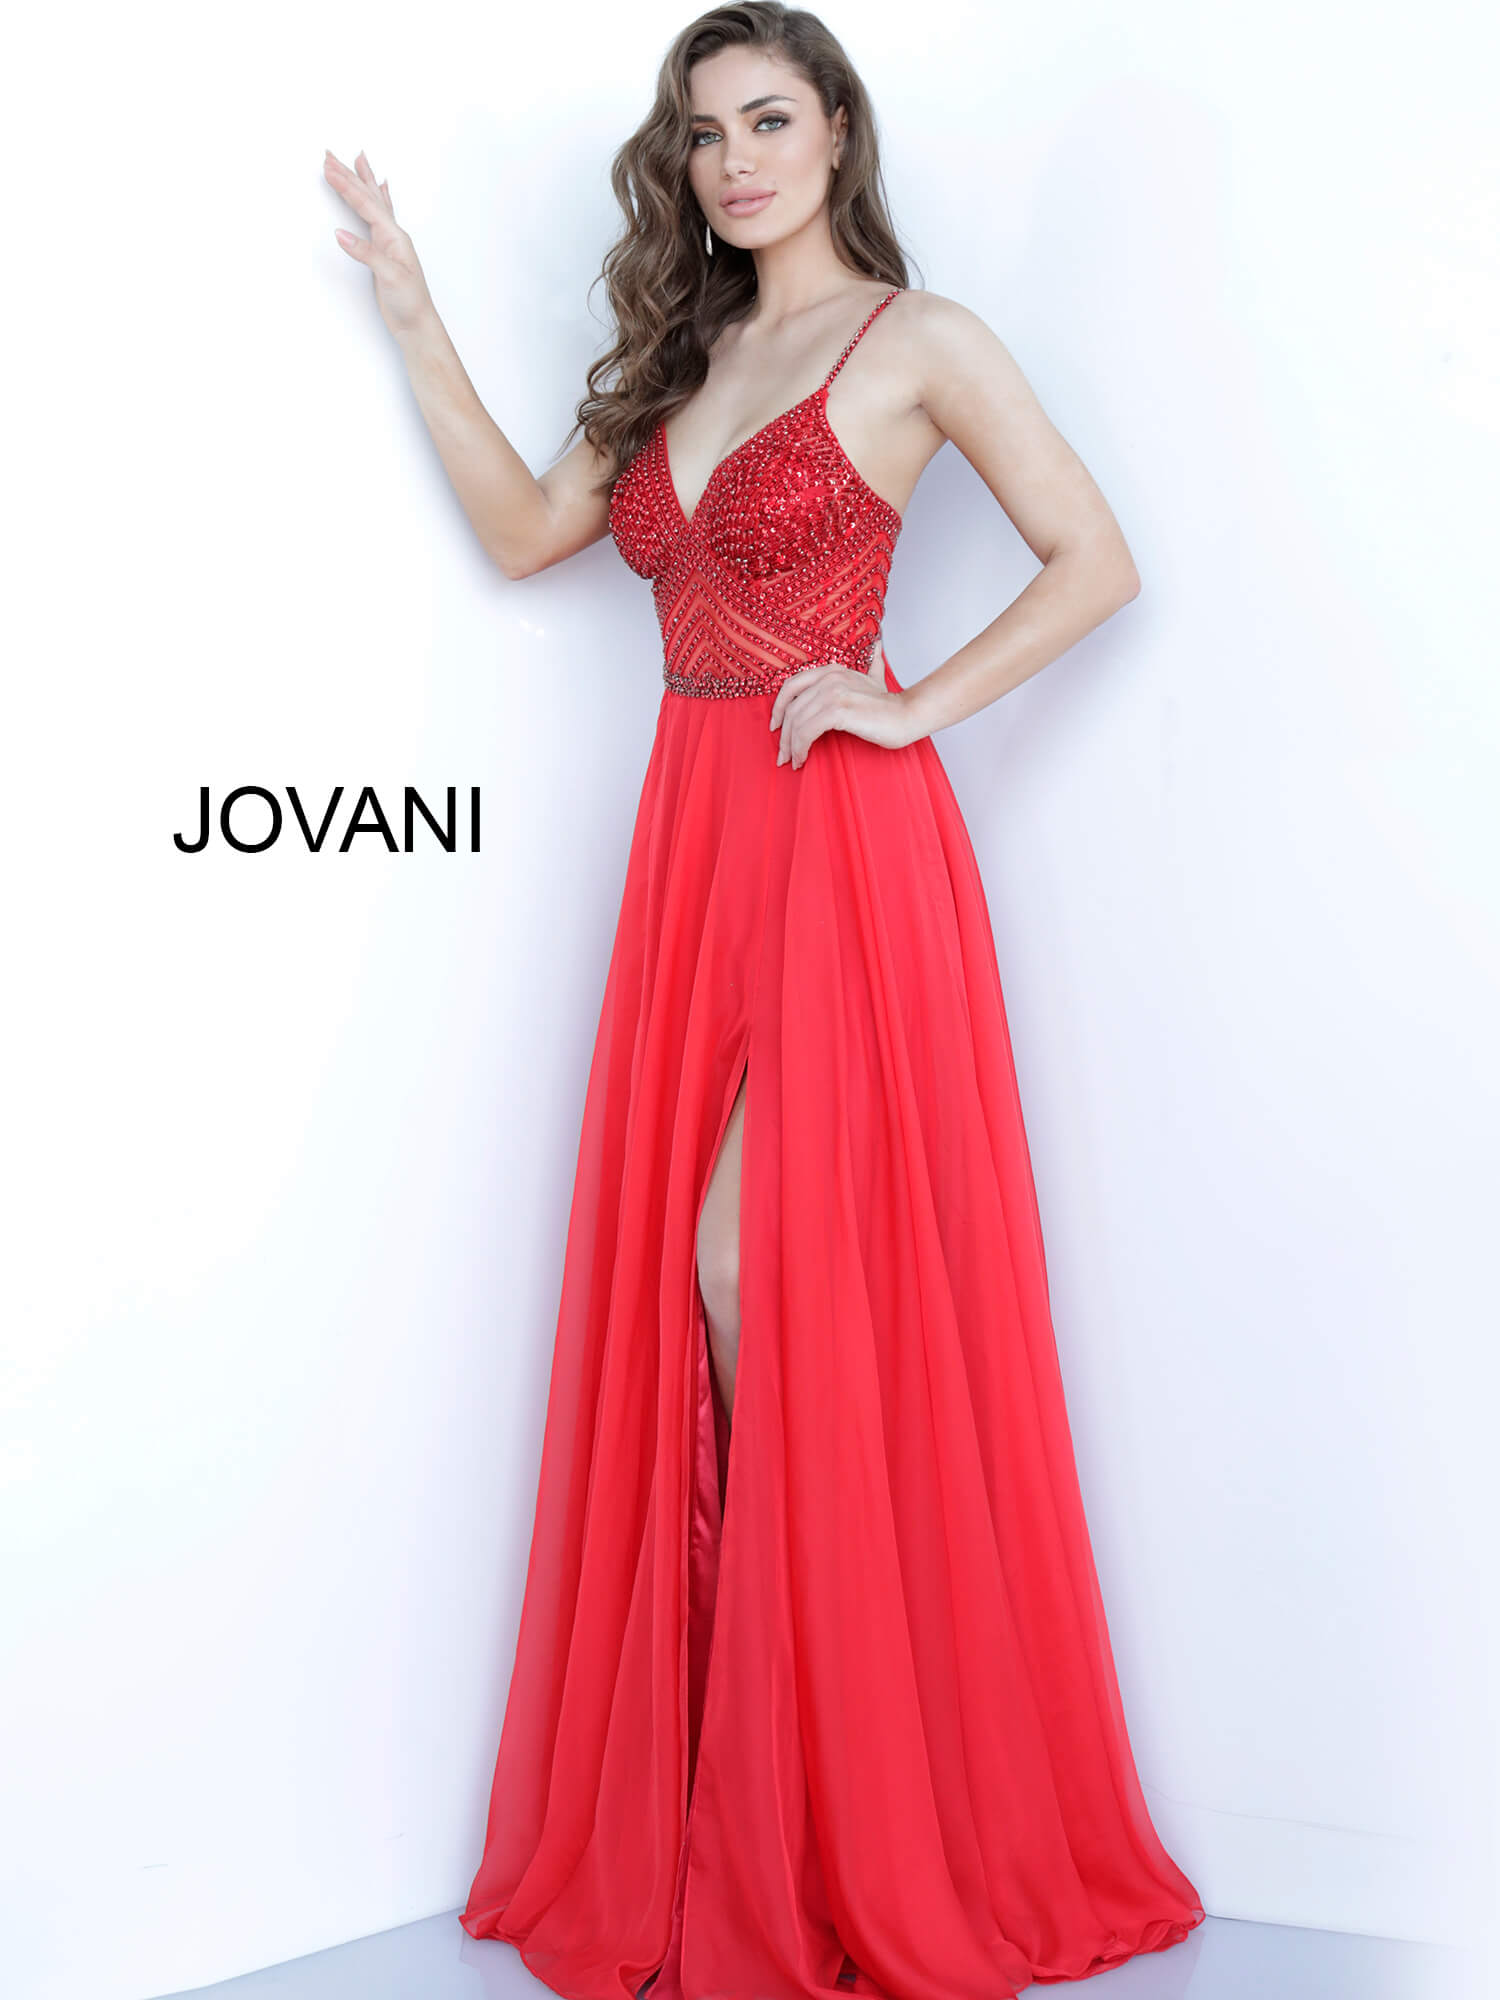 Jovani 66925 | Red Flowy Chiffon Embellished Prom Dress